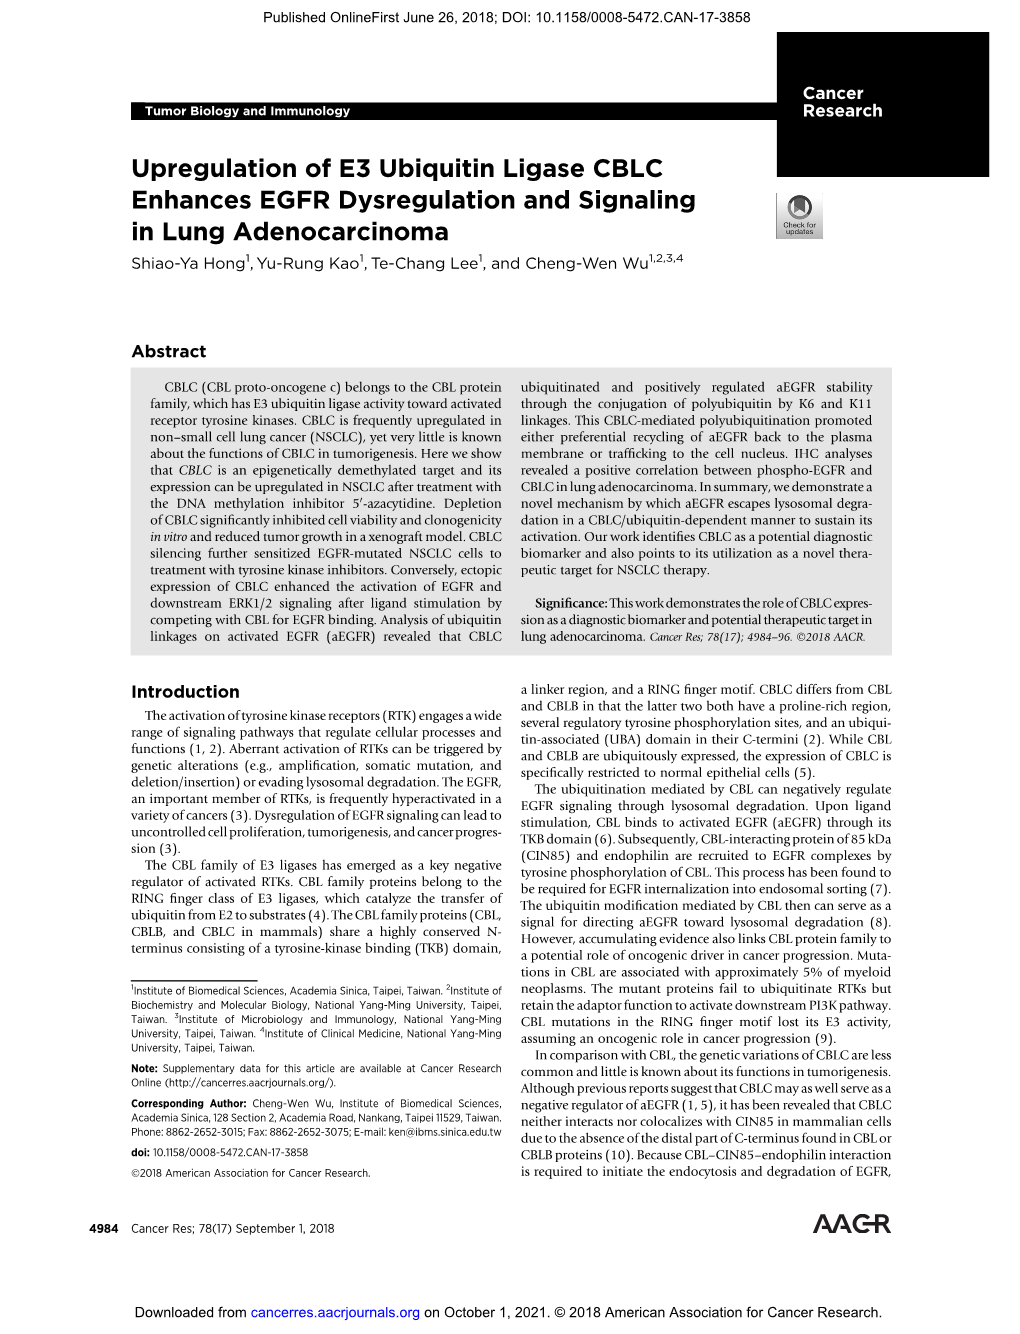 Upregulation of E3 Ubiquitin Ligase CBLC Enhances EGFR